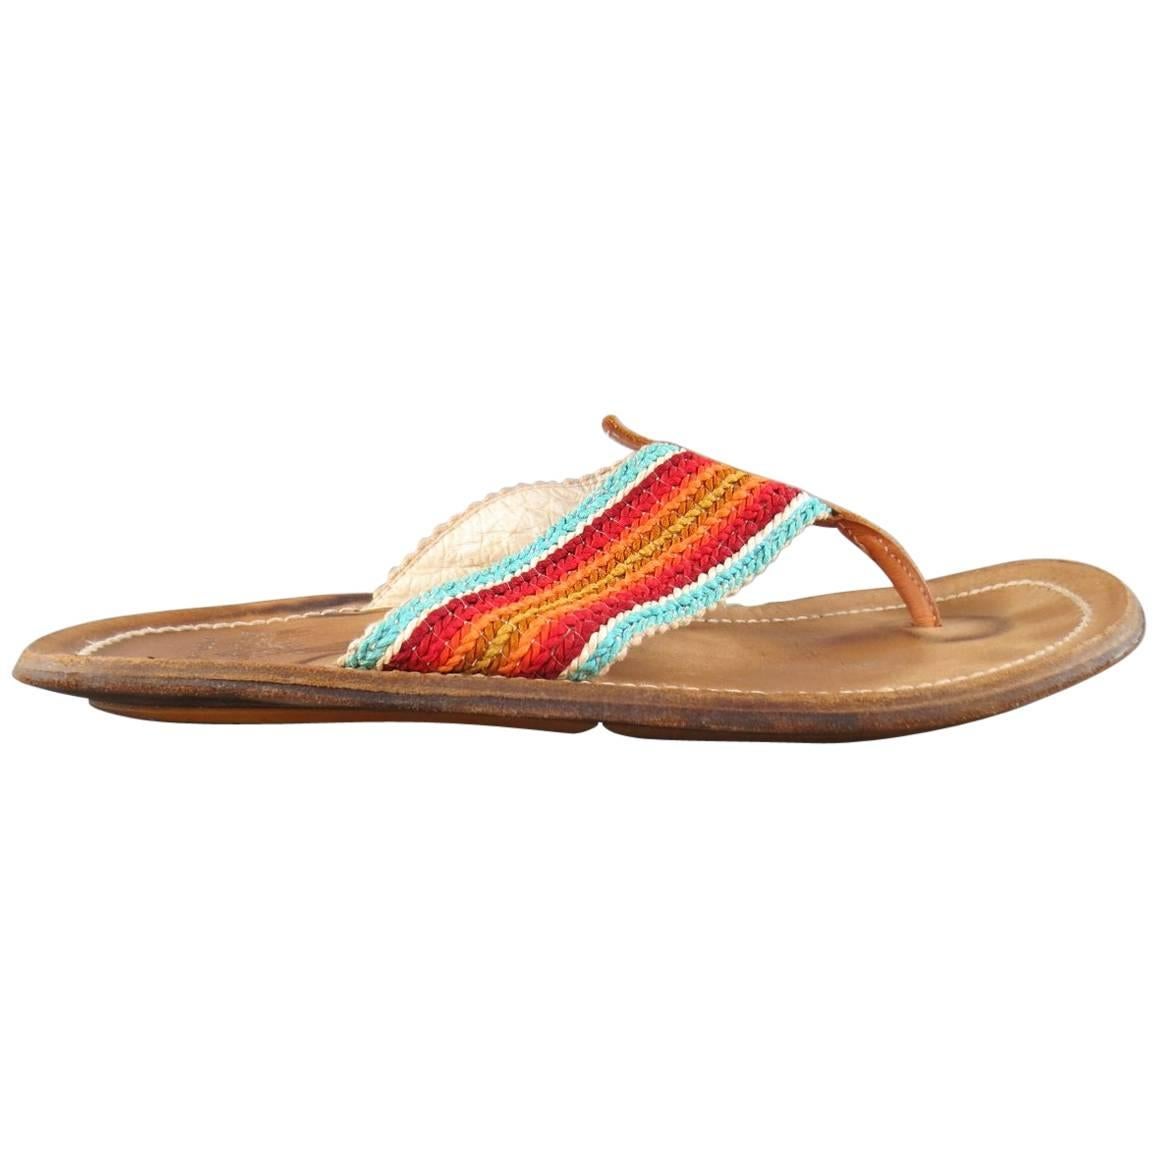 Men's DSQUARED2 Size 8 Tan Multi-Color Woven Strap Leather Thong Sandals